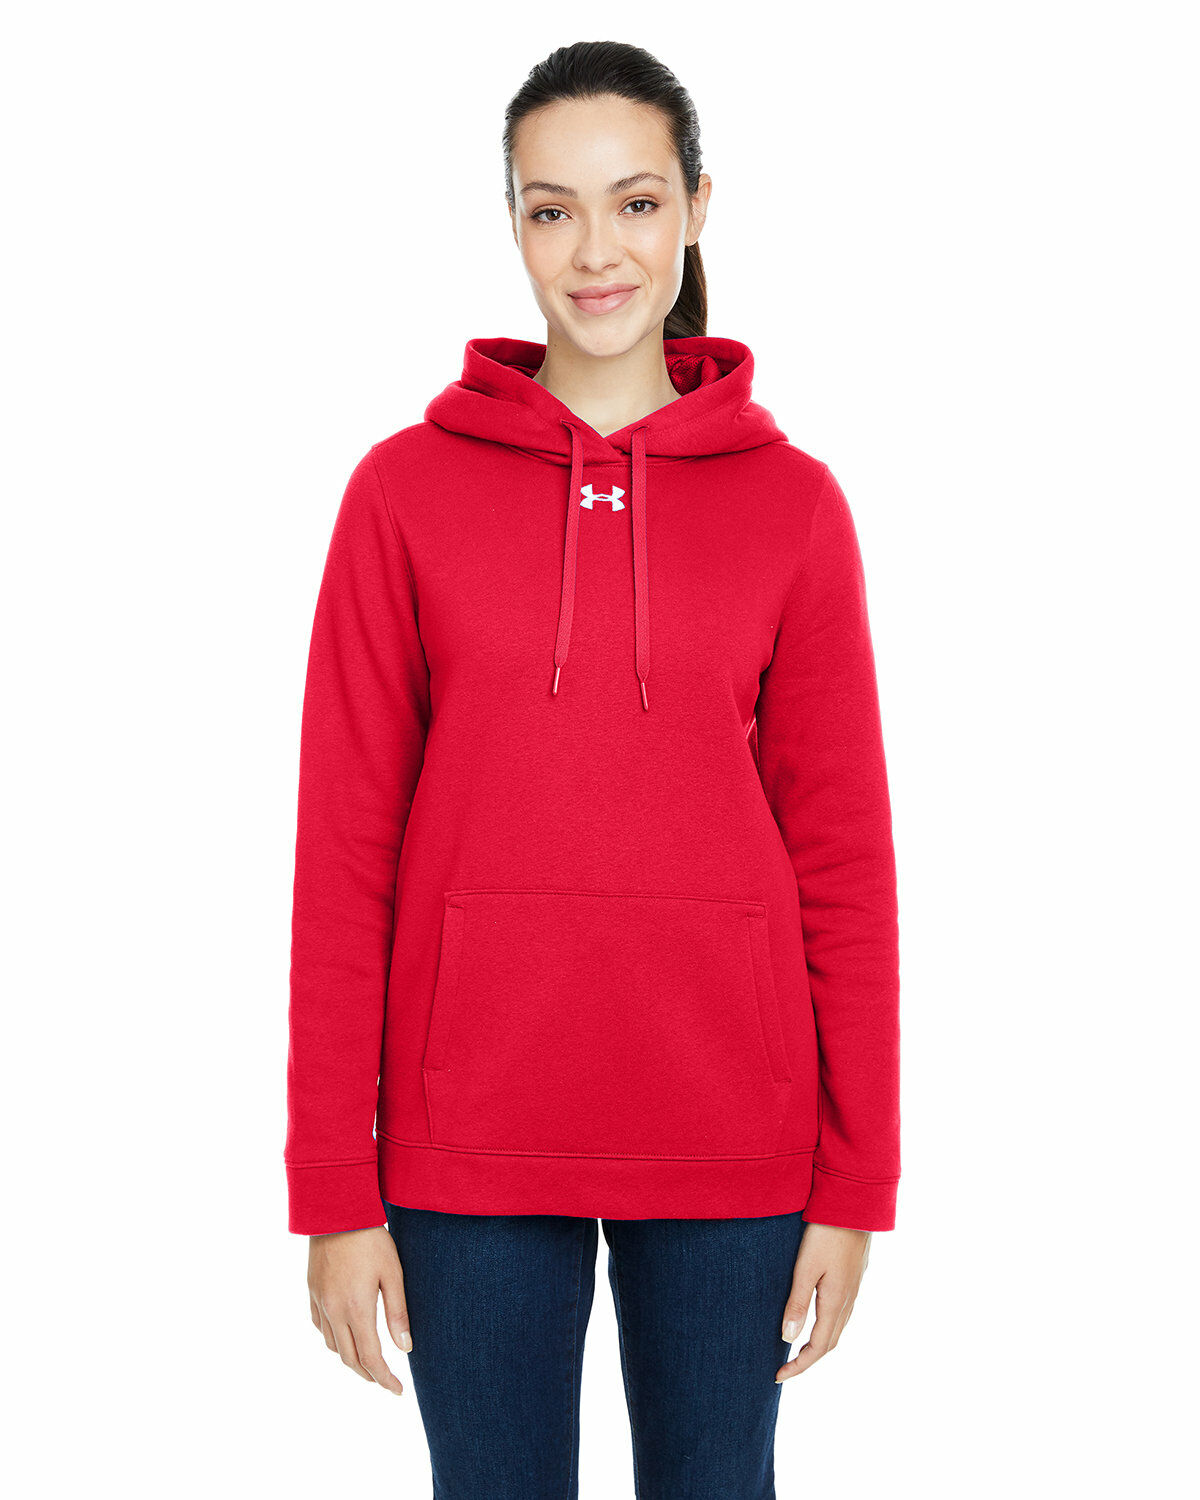 Cereal charla Uluru Custom Branded Under Armour — Under Armour Ladies Hustle Pullover Hooded  Sweatshirt - Drive Merchandise